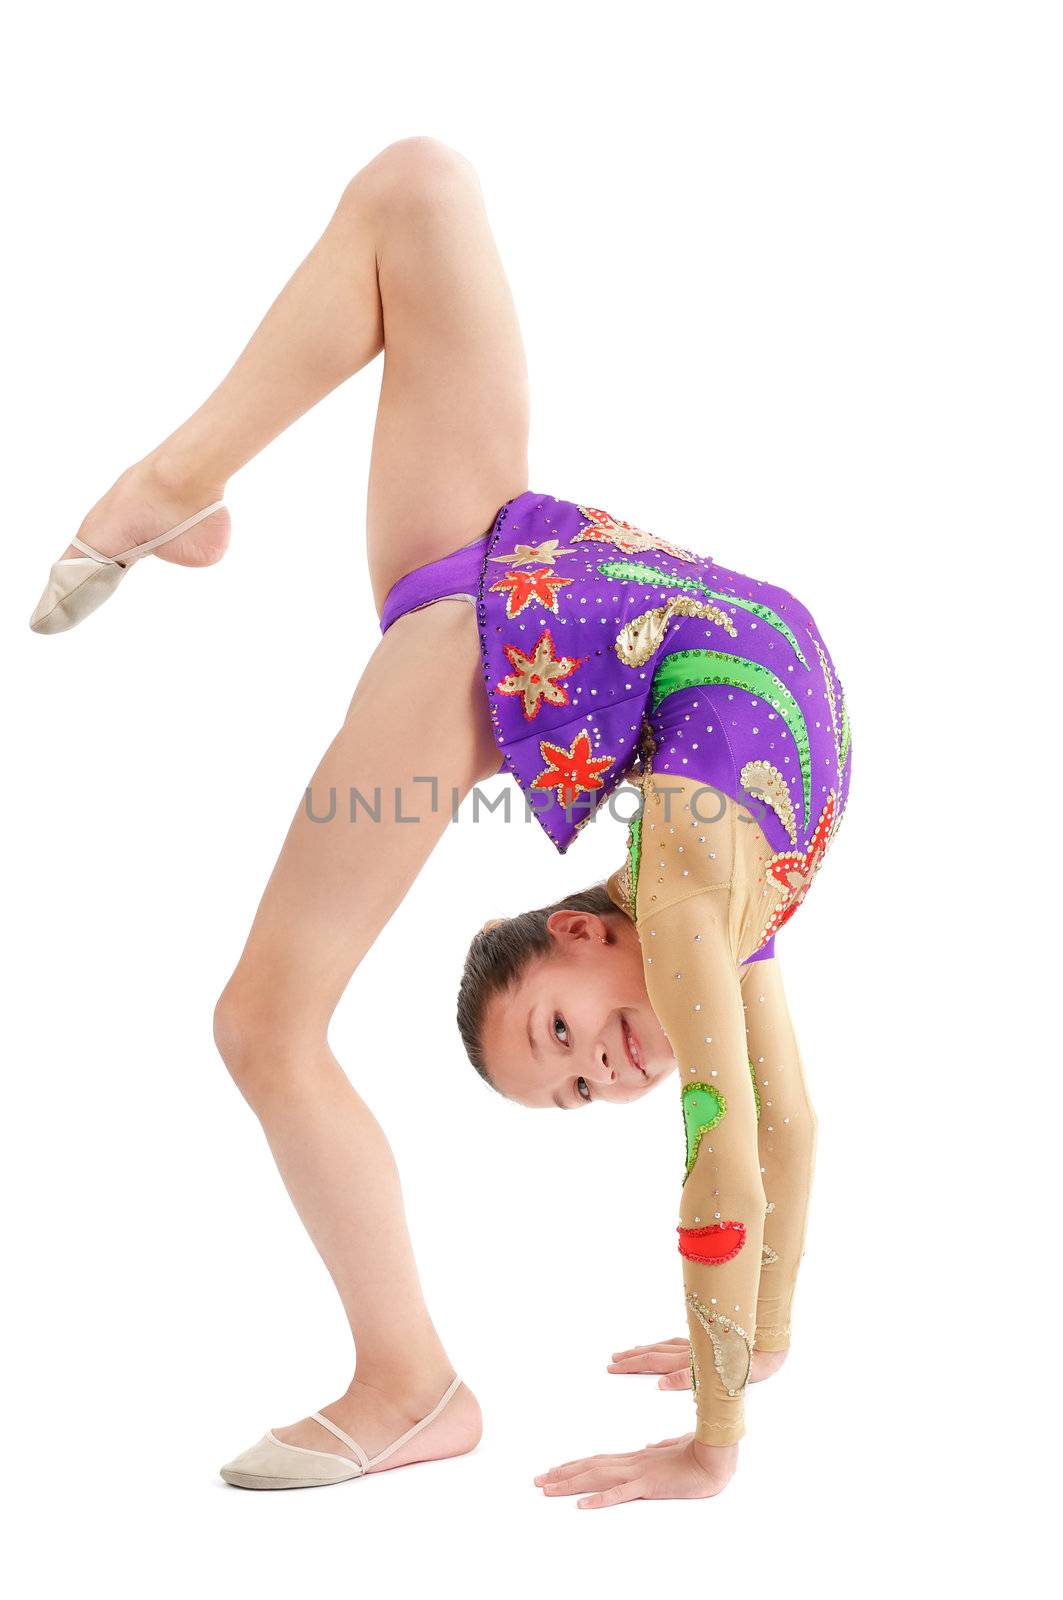 Young Girl Gymnast by zhekos